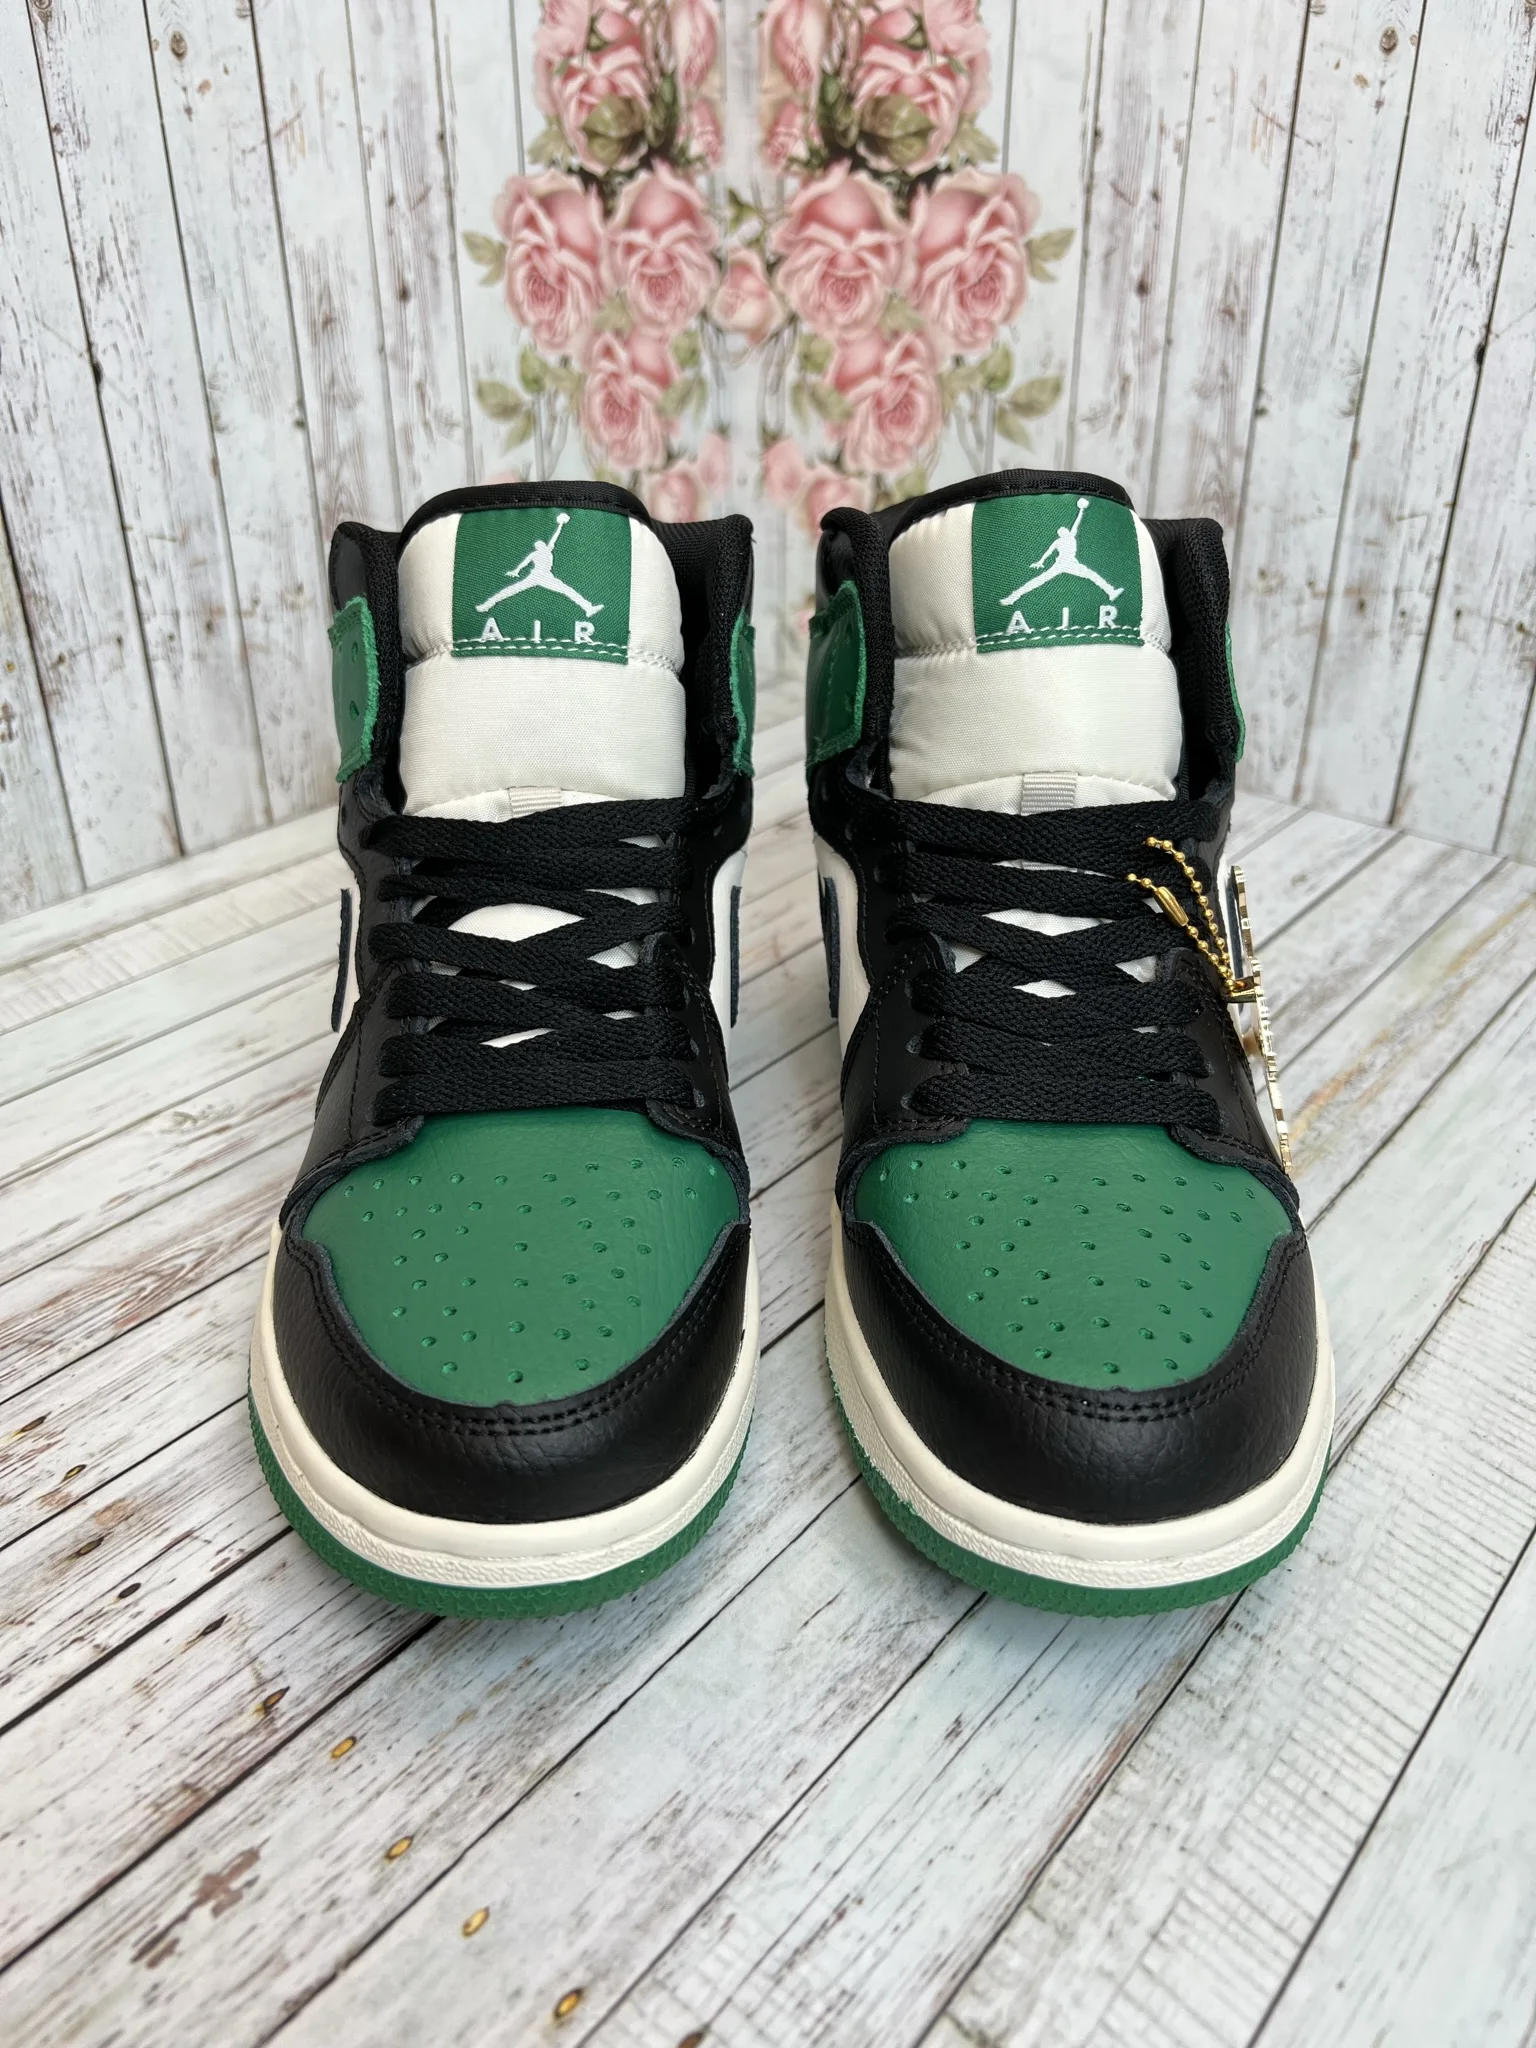 Кроссовки Nike AIR Jordan (Джордан) зеленые | AliExpress